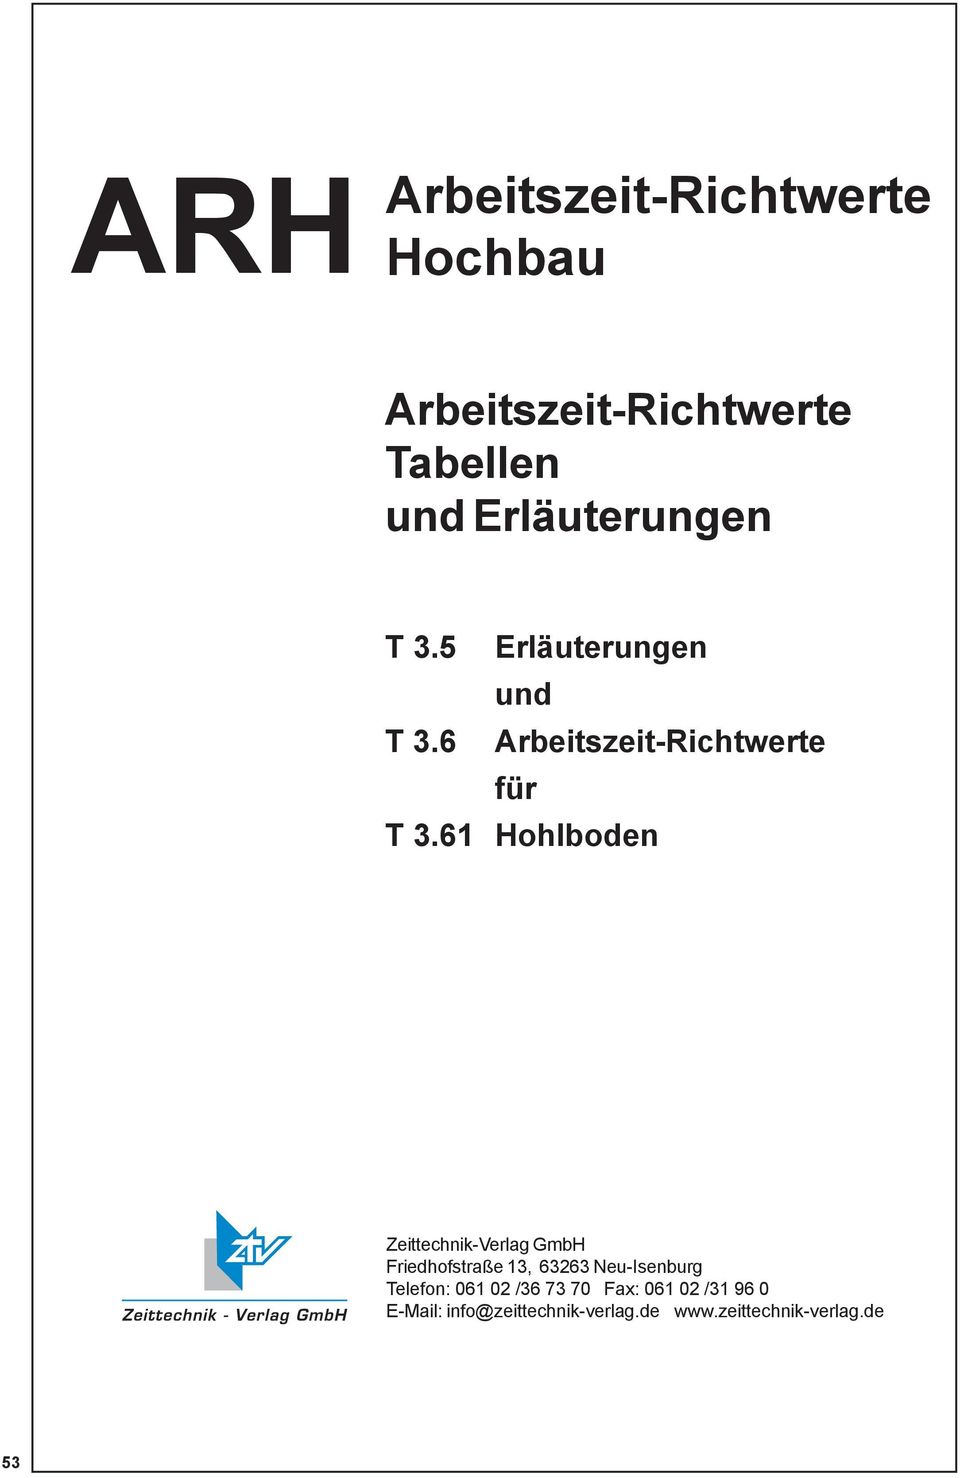 61 Hohlboden Zeittechnik-Verlag GmbH Friedhofstraße 13, 63263 Neu-Isenburg